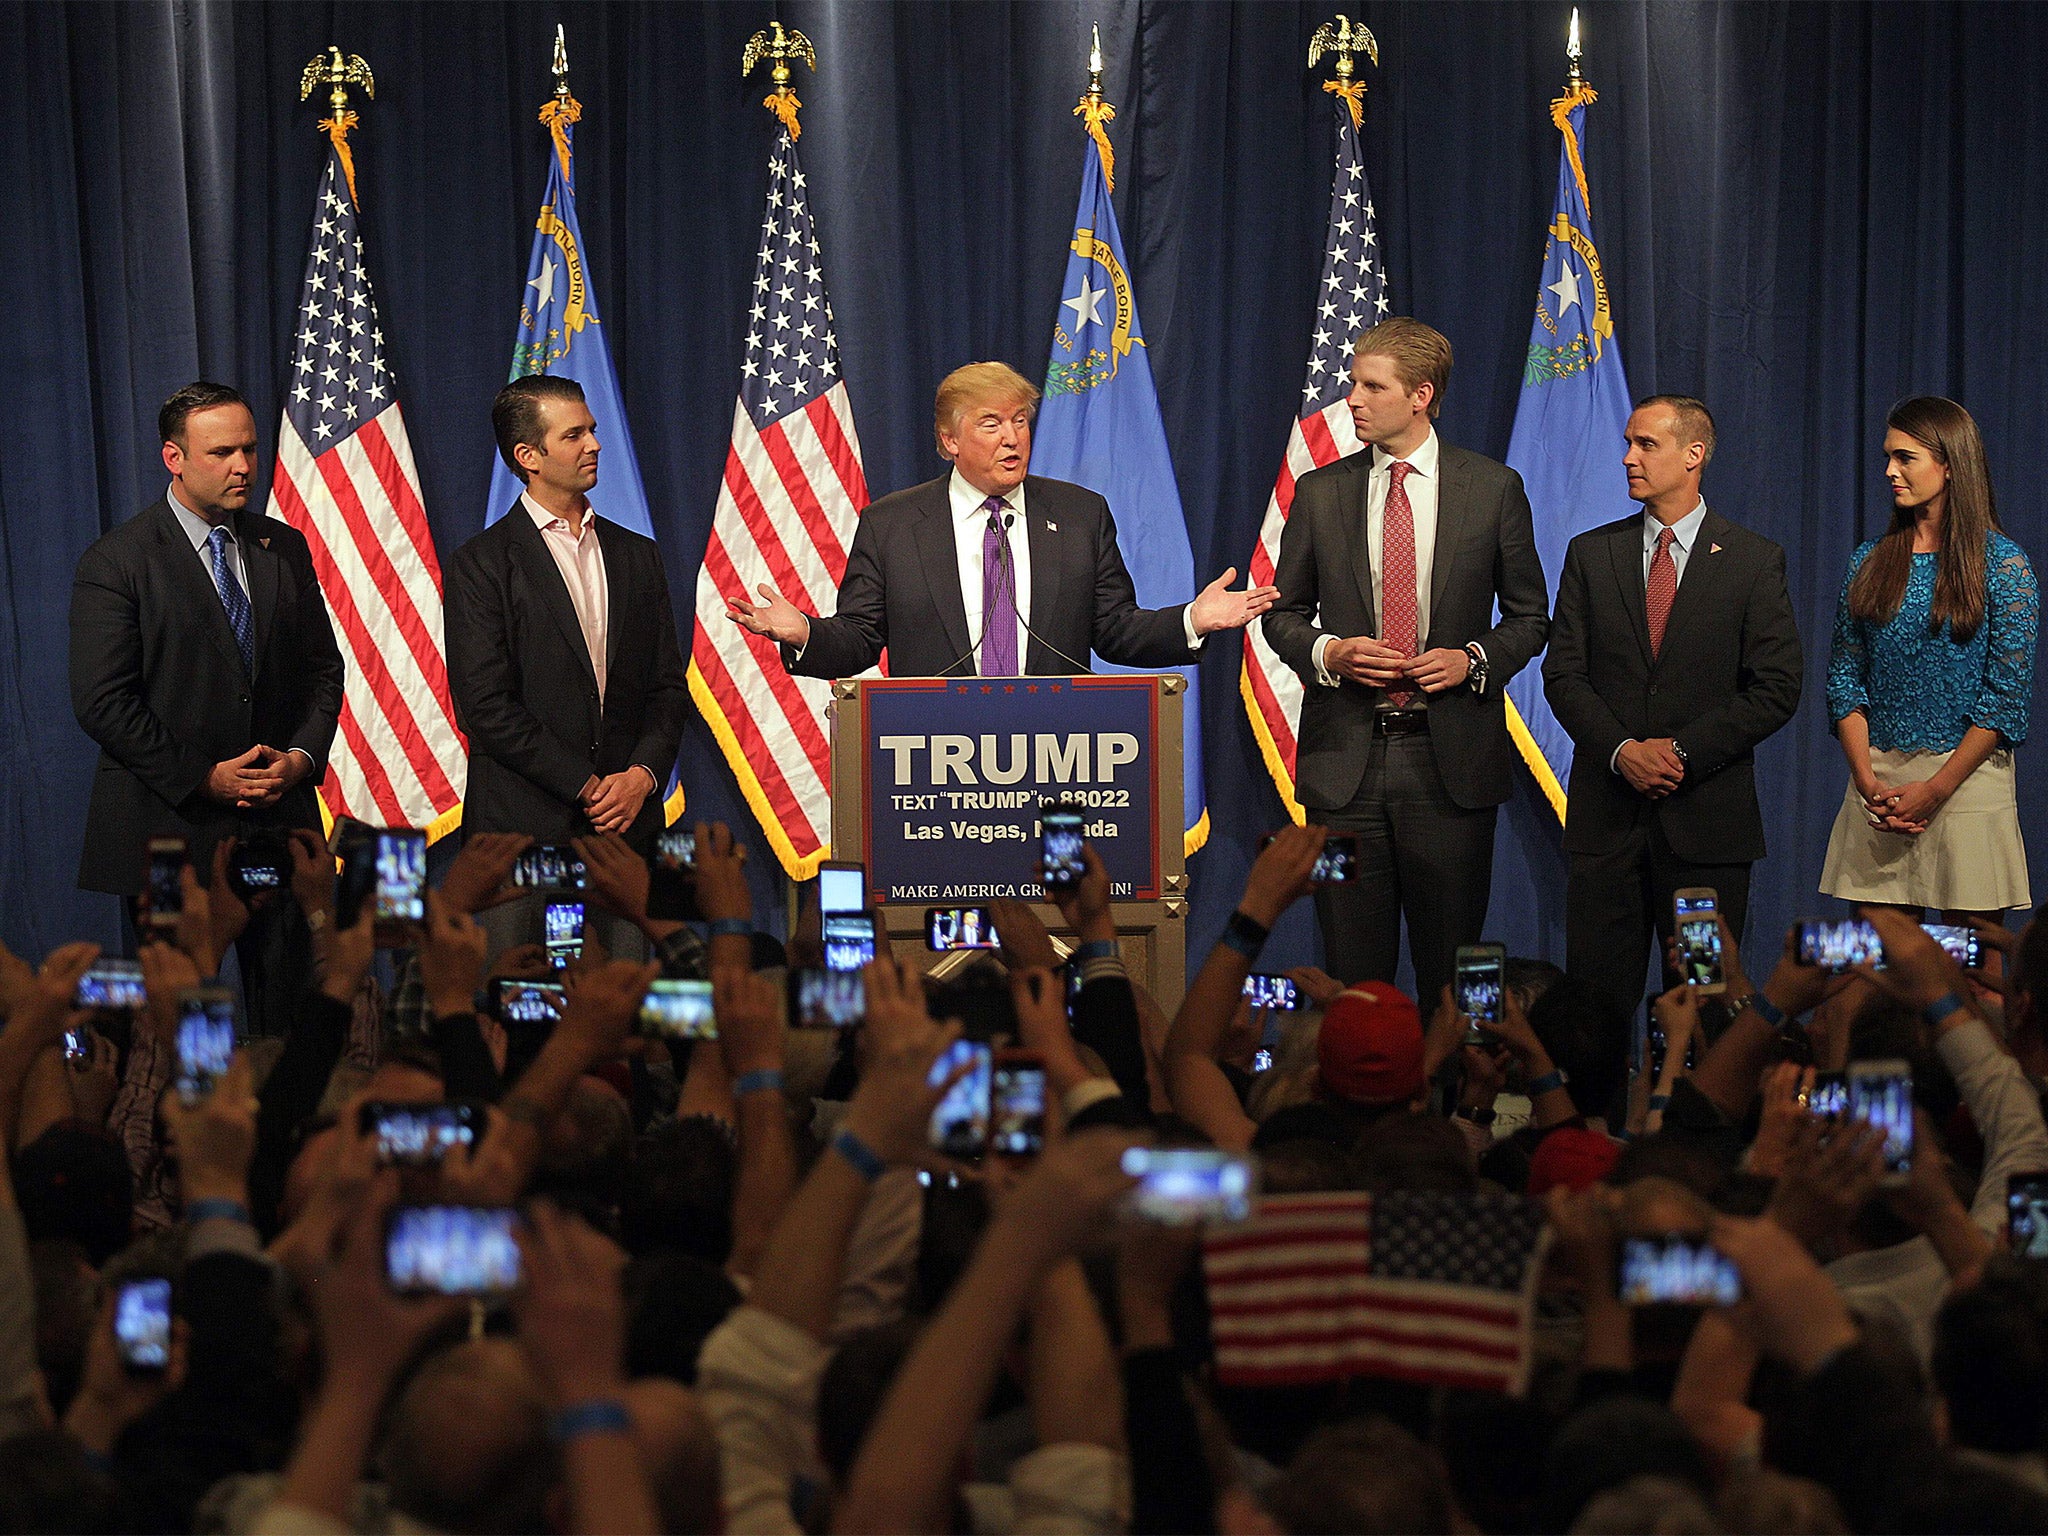 Donald Trump spoke to supporters in a Las Vegas casino after his Nevada triumph